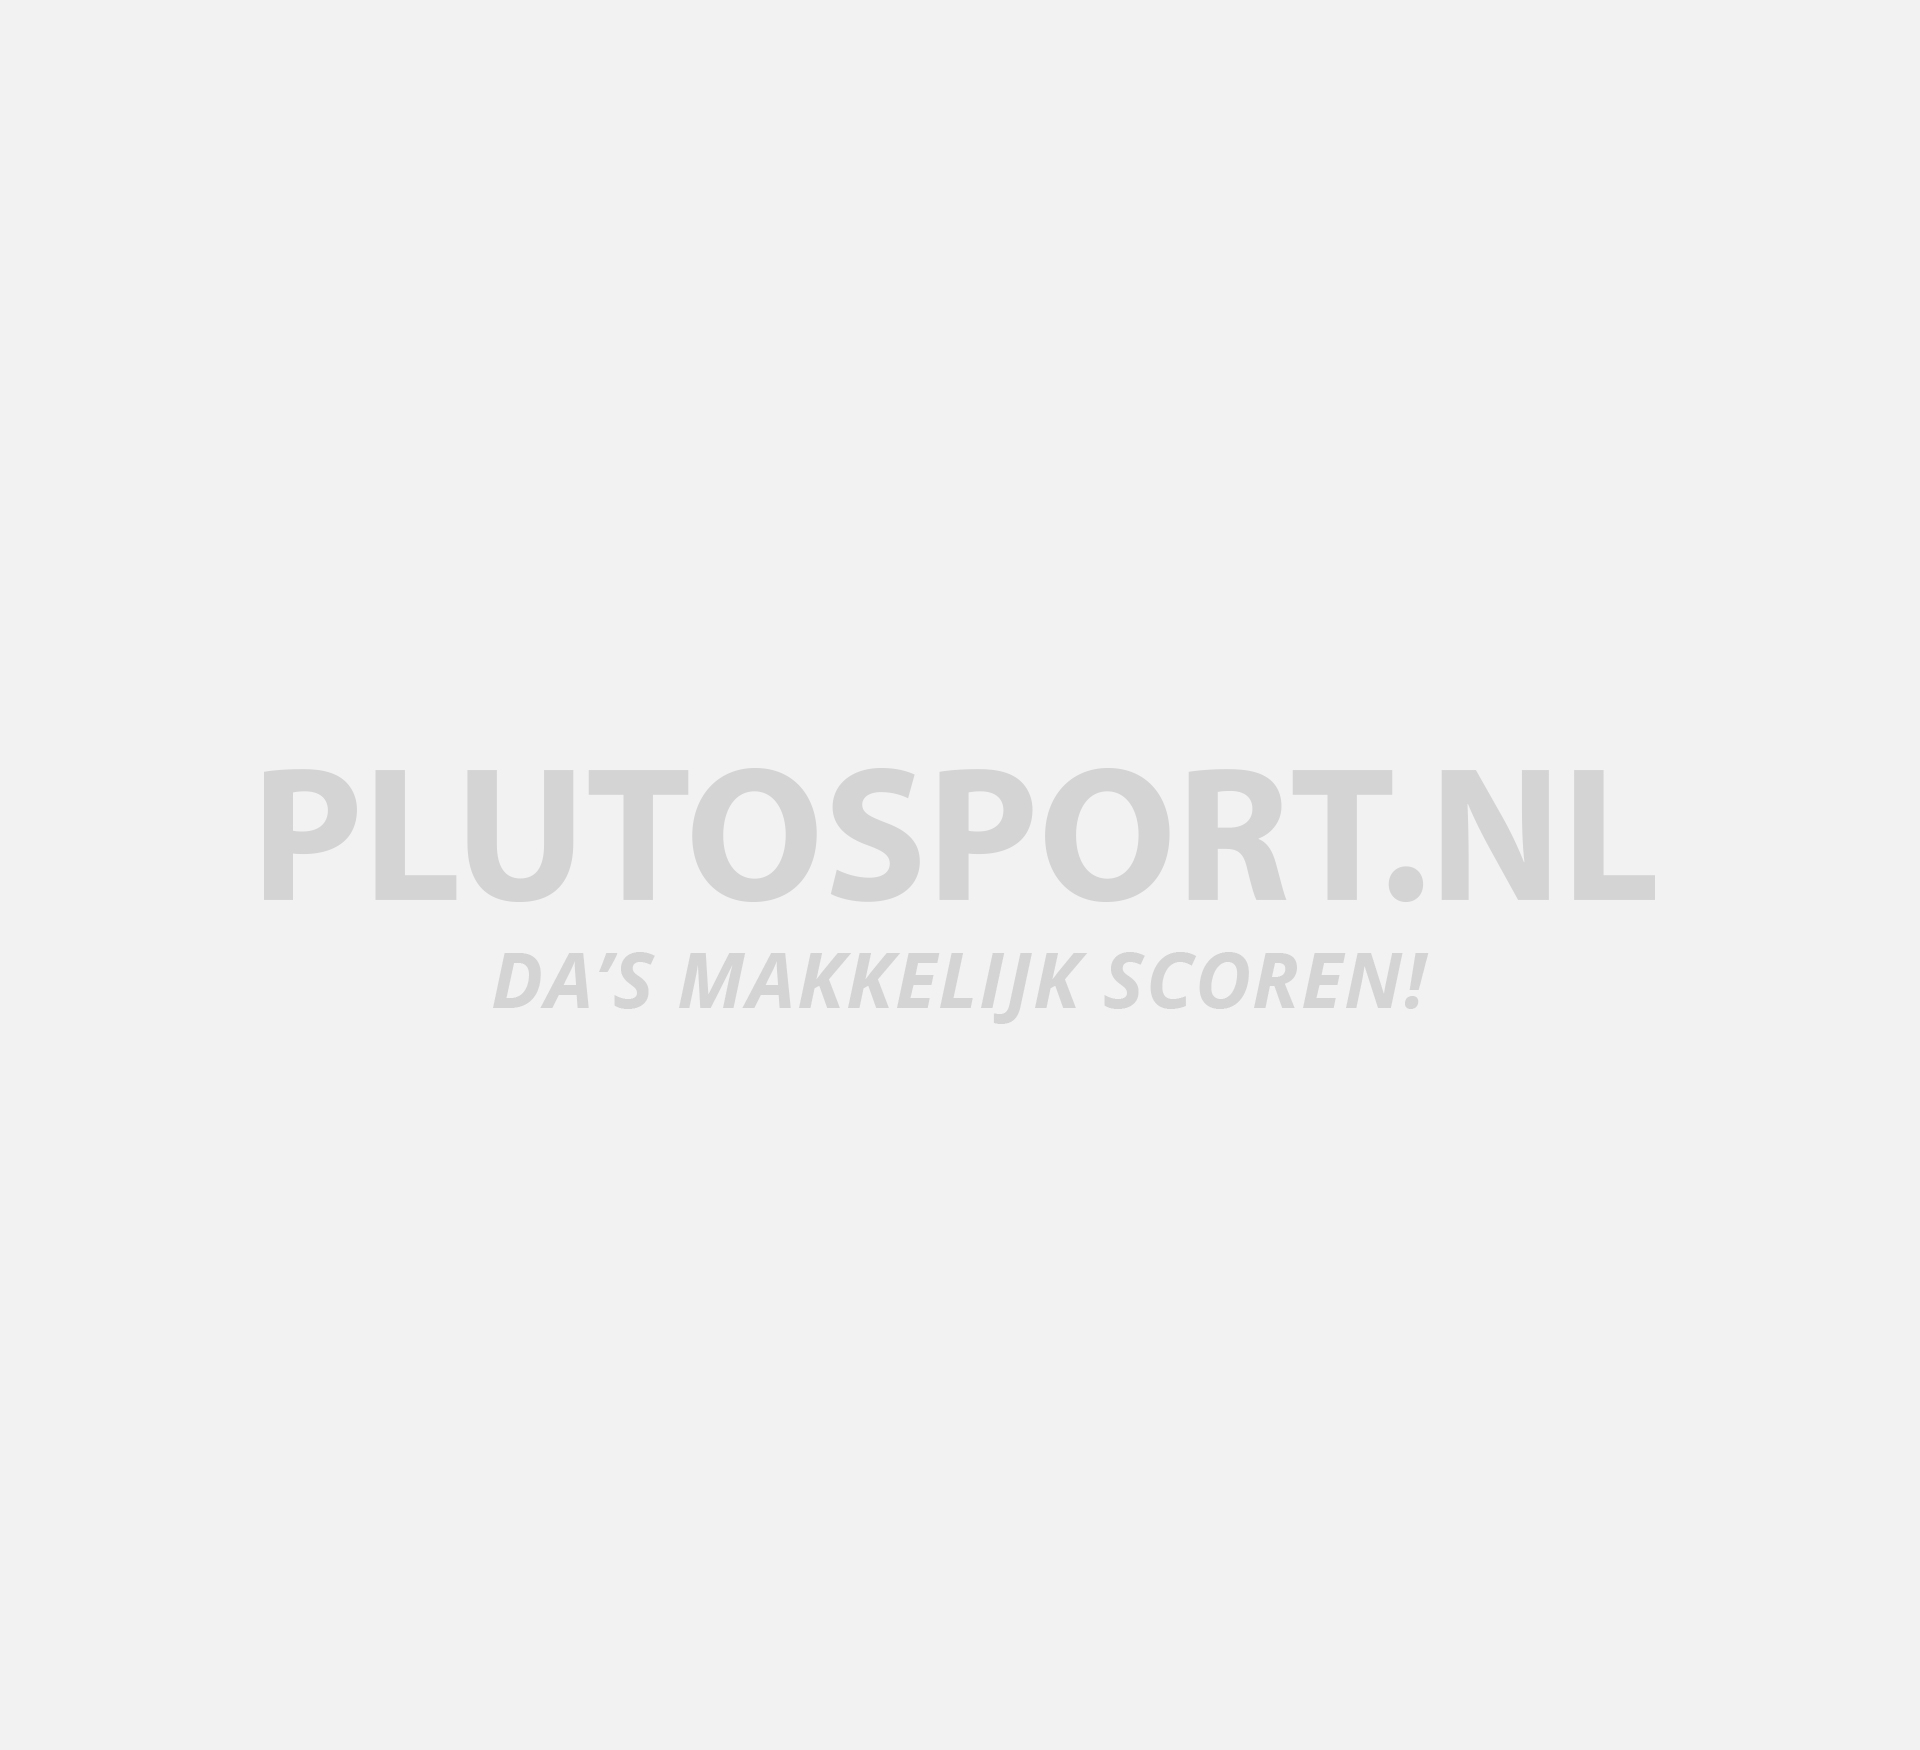 Nike XS | Plutosport